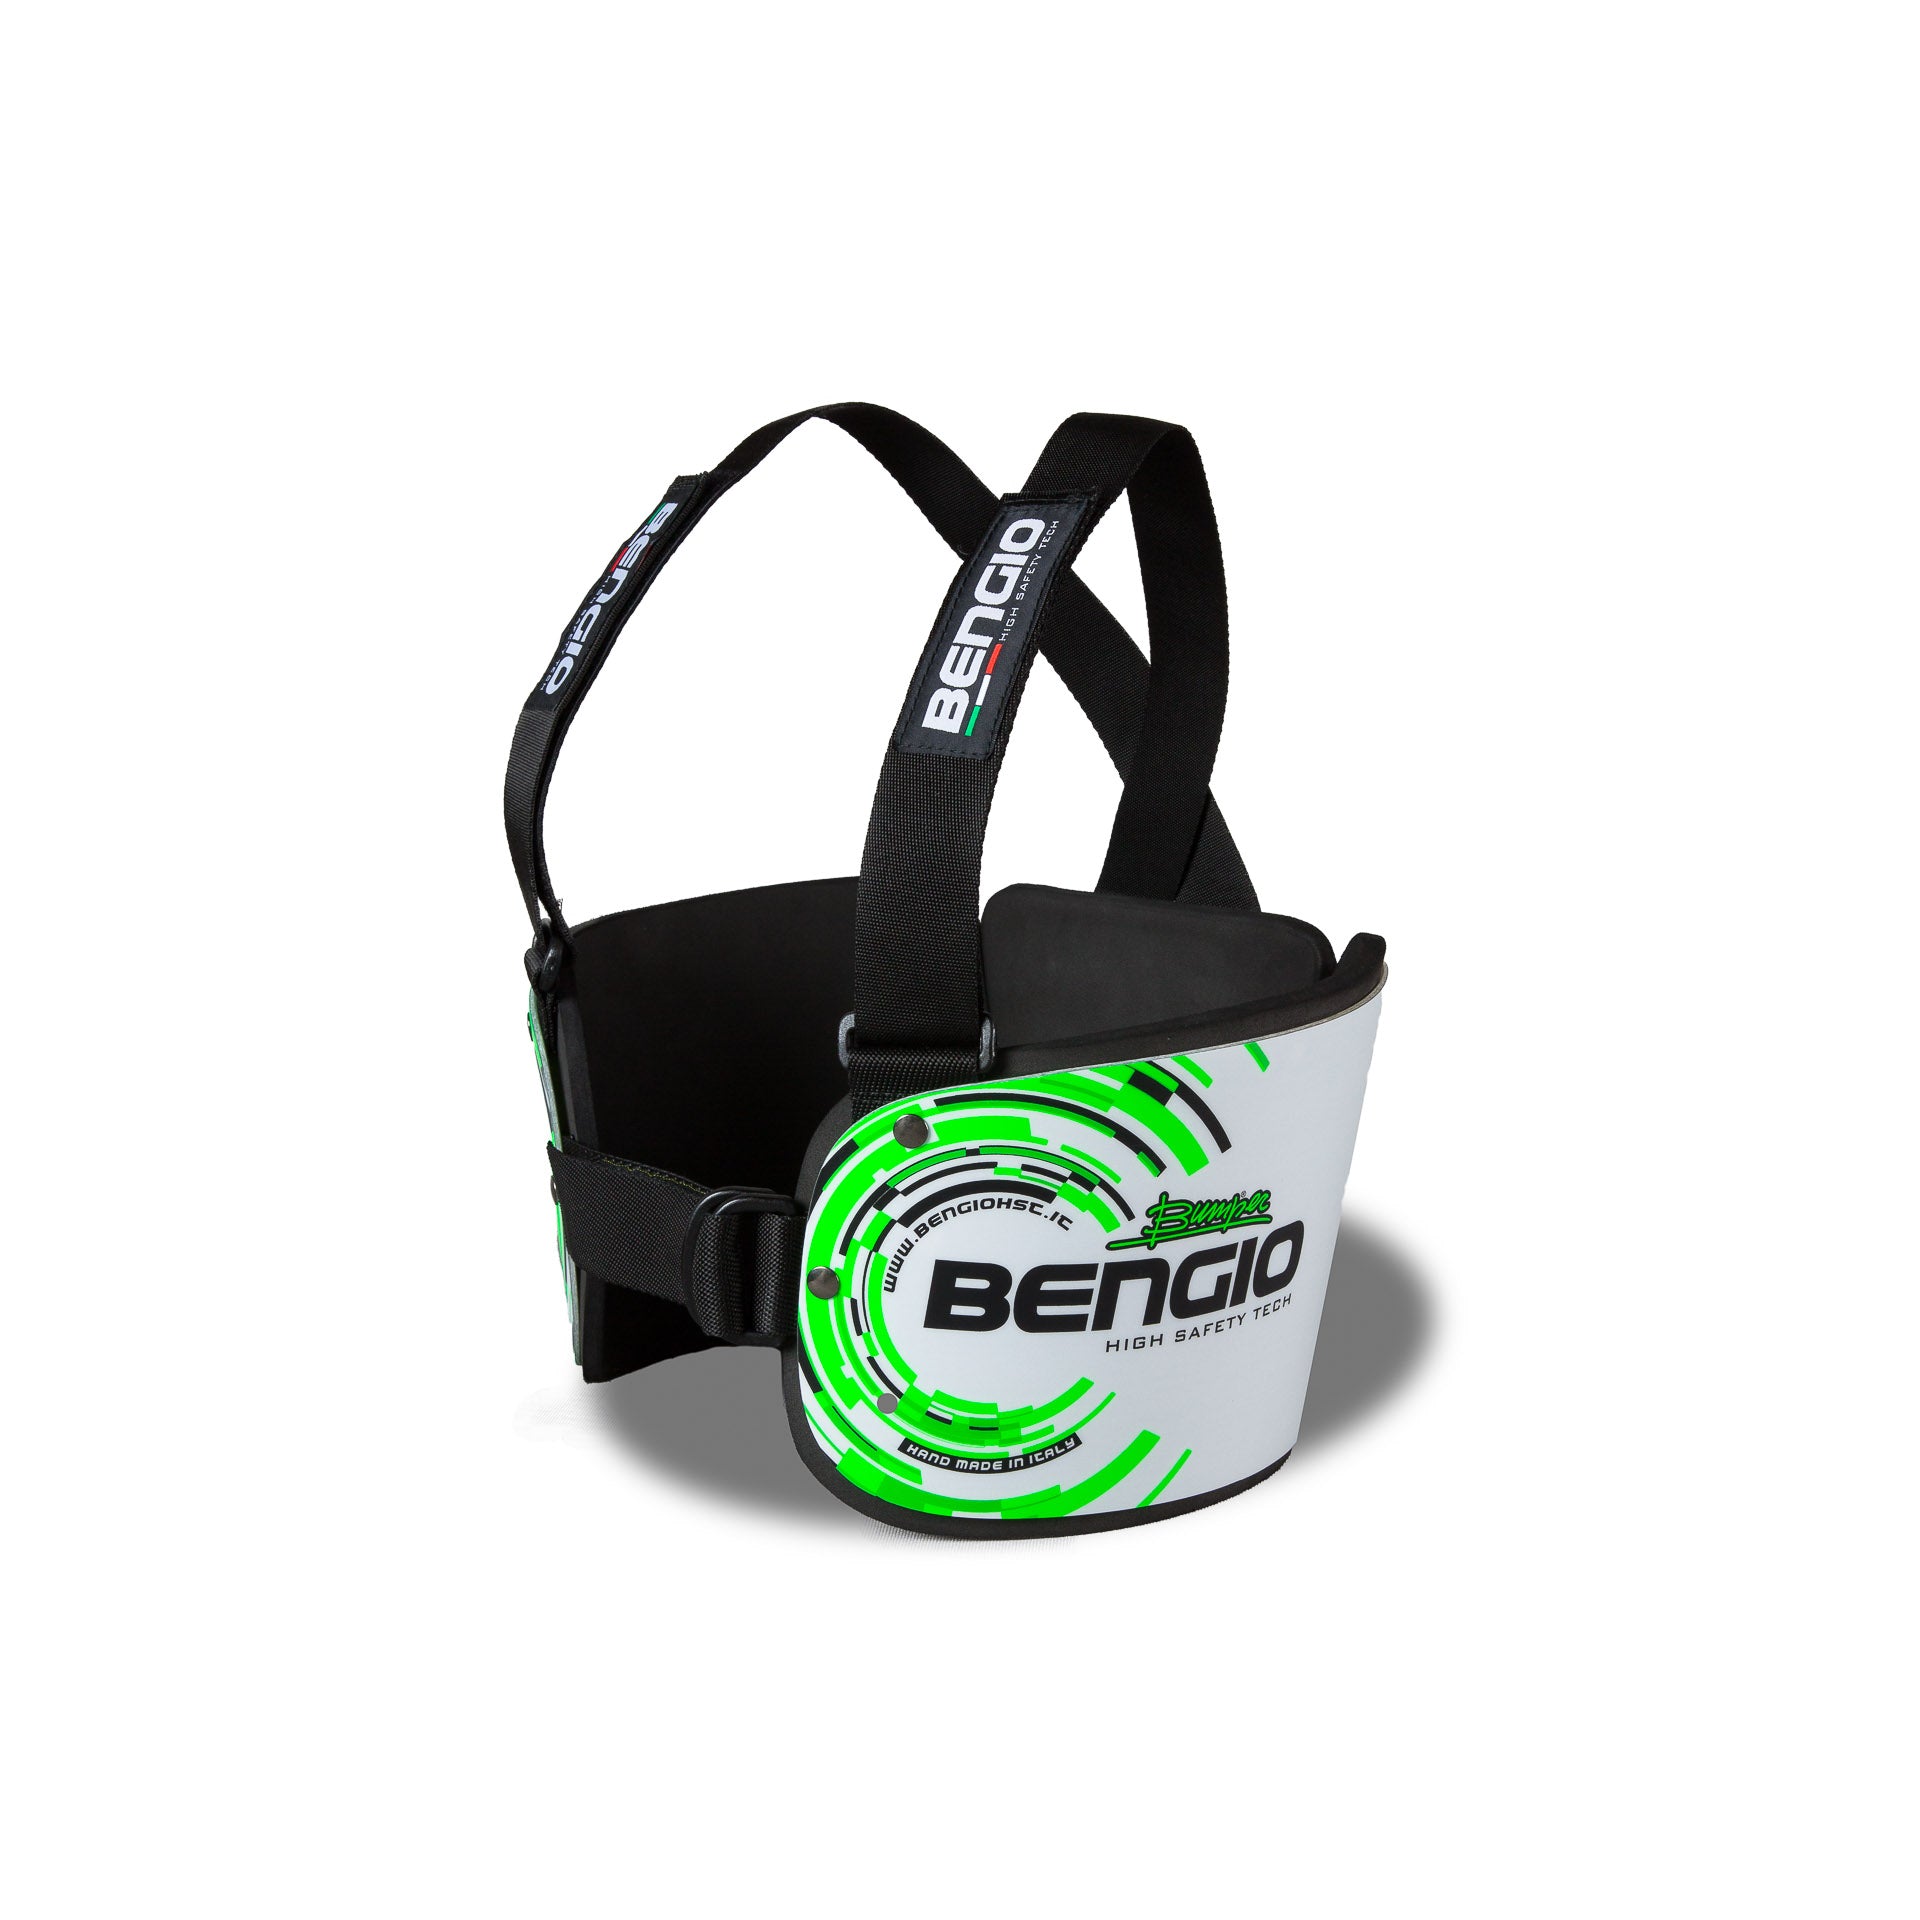 BENGIO STDSMWG BUMPER Standard Захист ребер для картингу, білий/зелений, розмір S/M Photo-1 